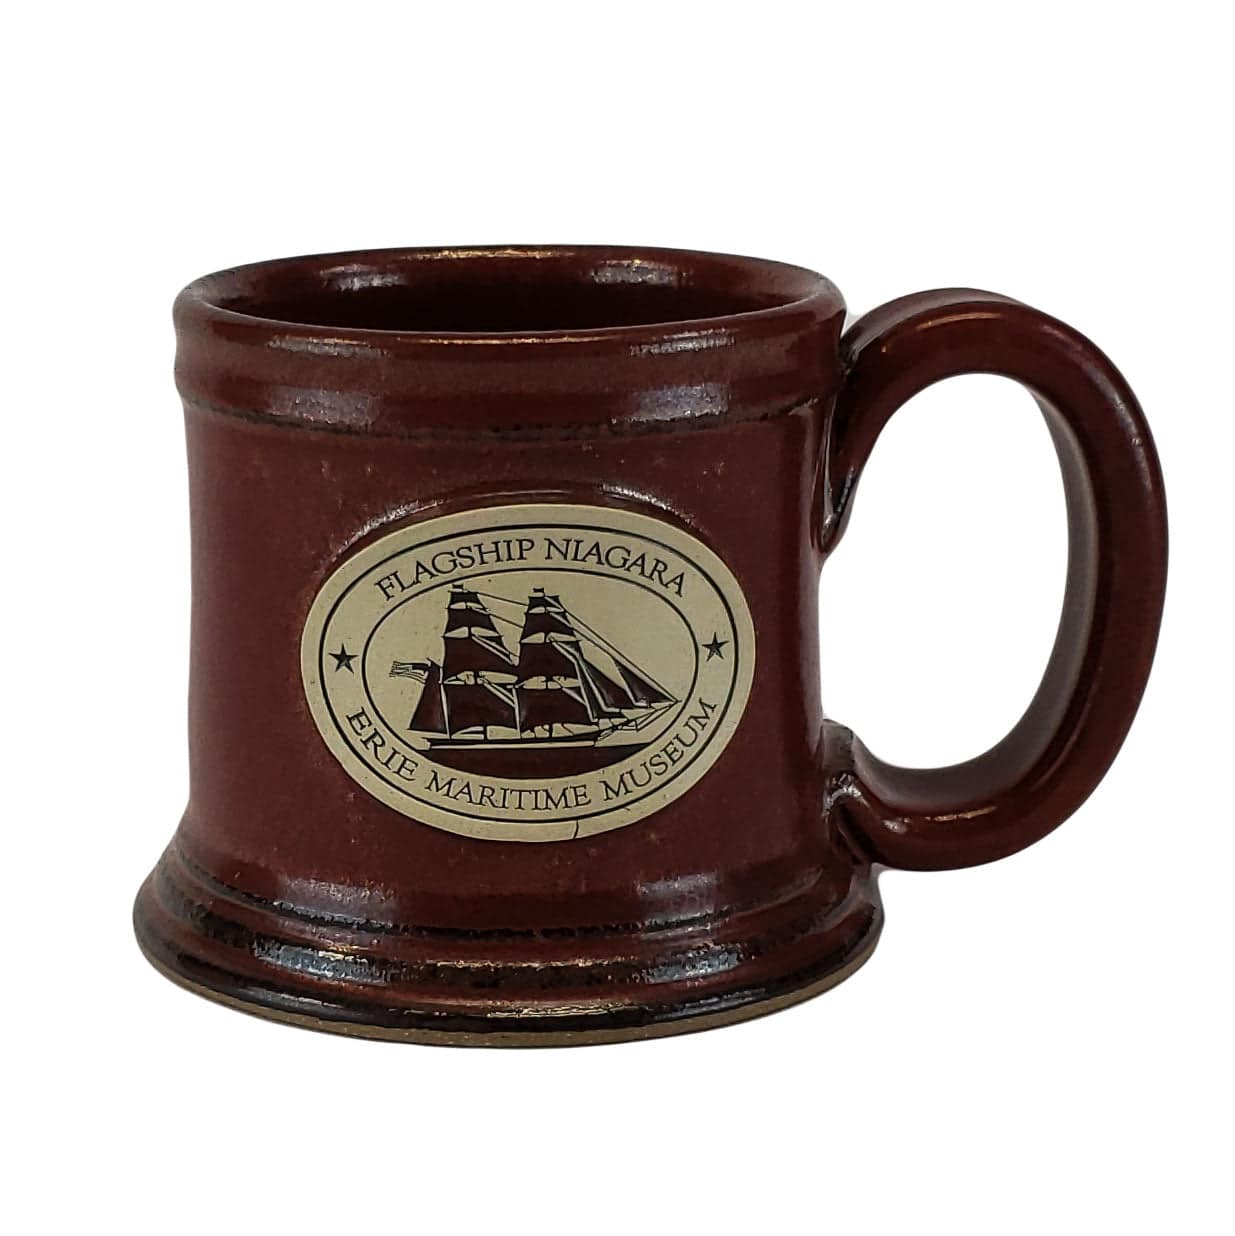 US Brig Niagara Stoneware Mug  Erie Maritime Museum eStore